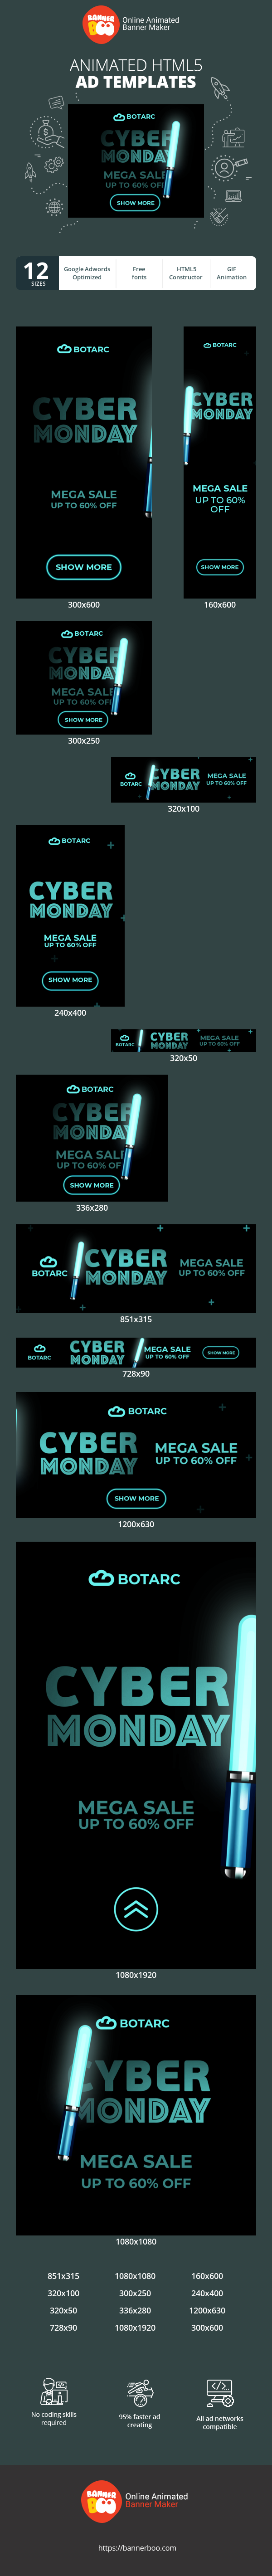 Szablon reklamy banerowej — Cyber Monday — Mega Sale Up To 60% Off